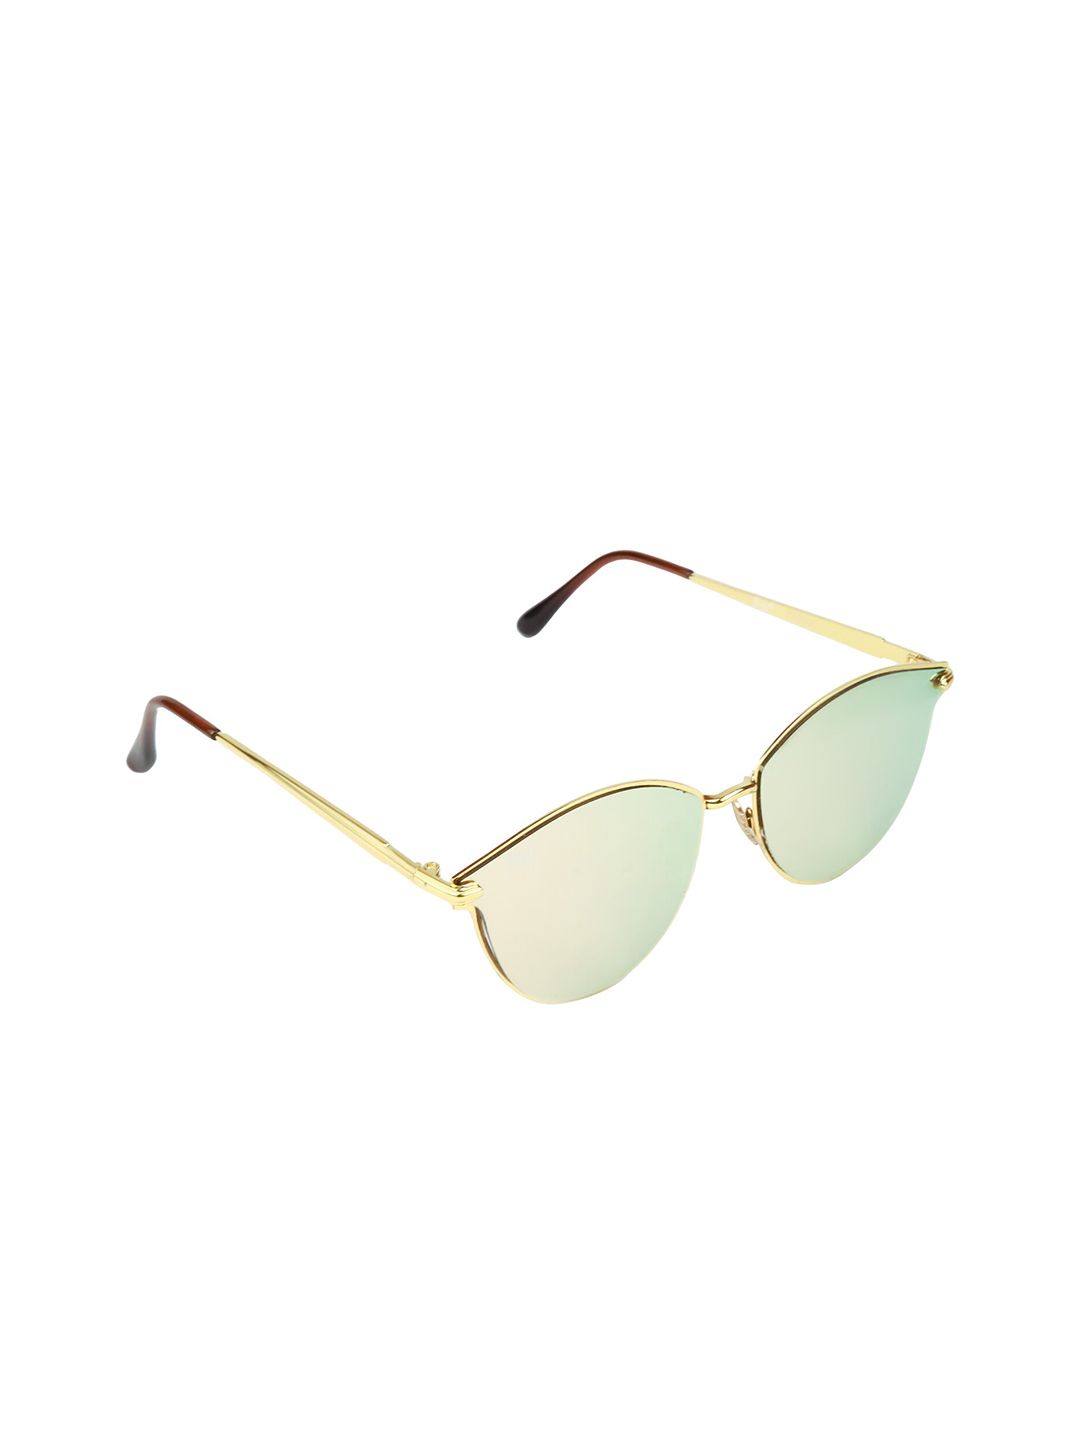 Floyd Unisex Yellow UV Protected Cateye Sunglasses M5935 Price in India